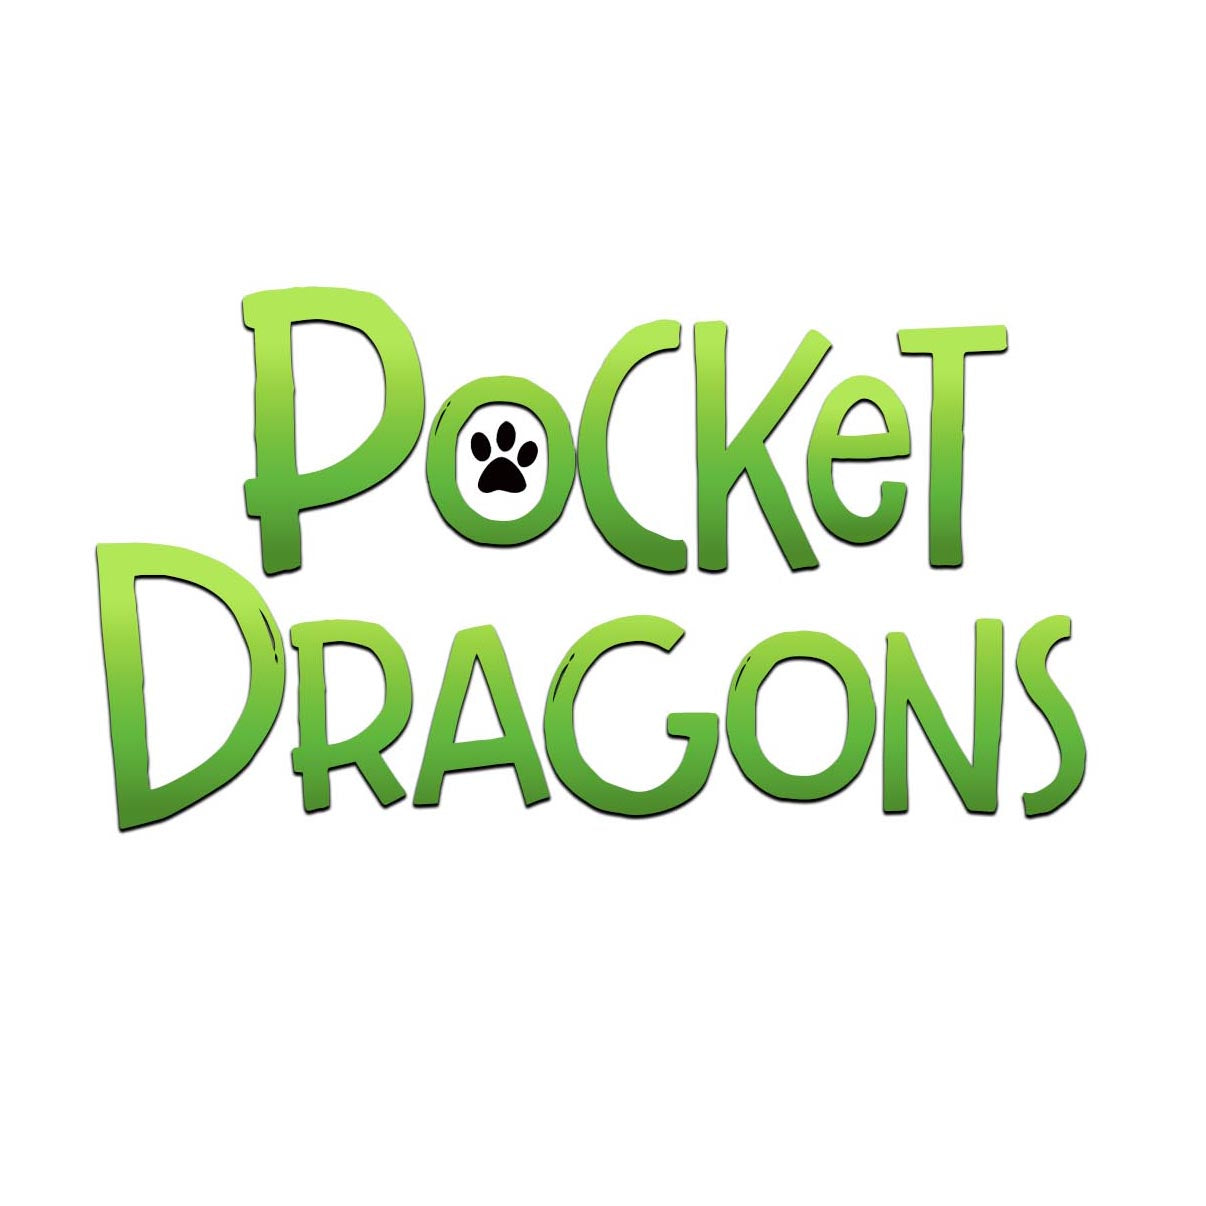 Chrome the Pocket Dragon